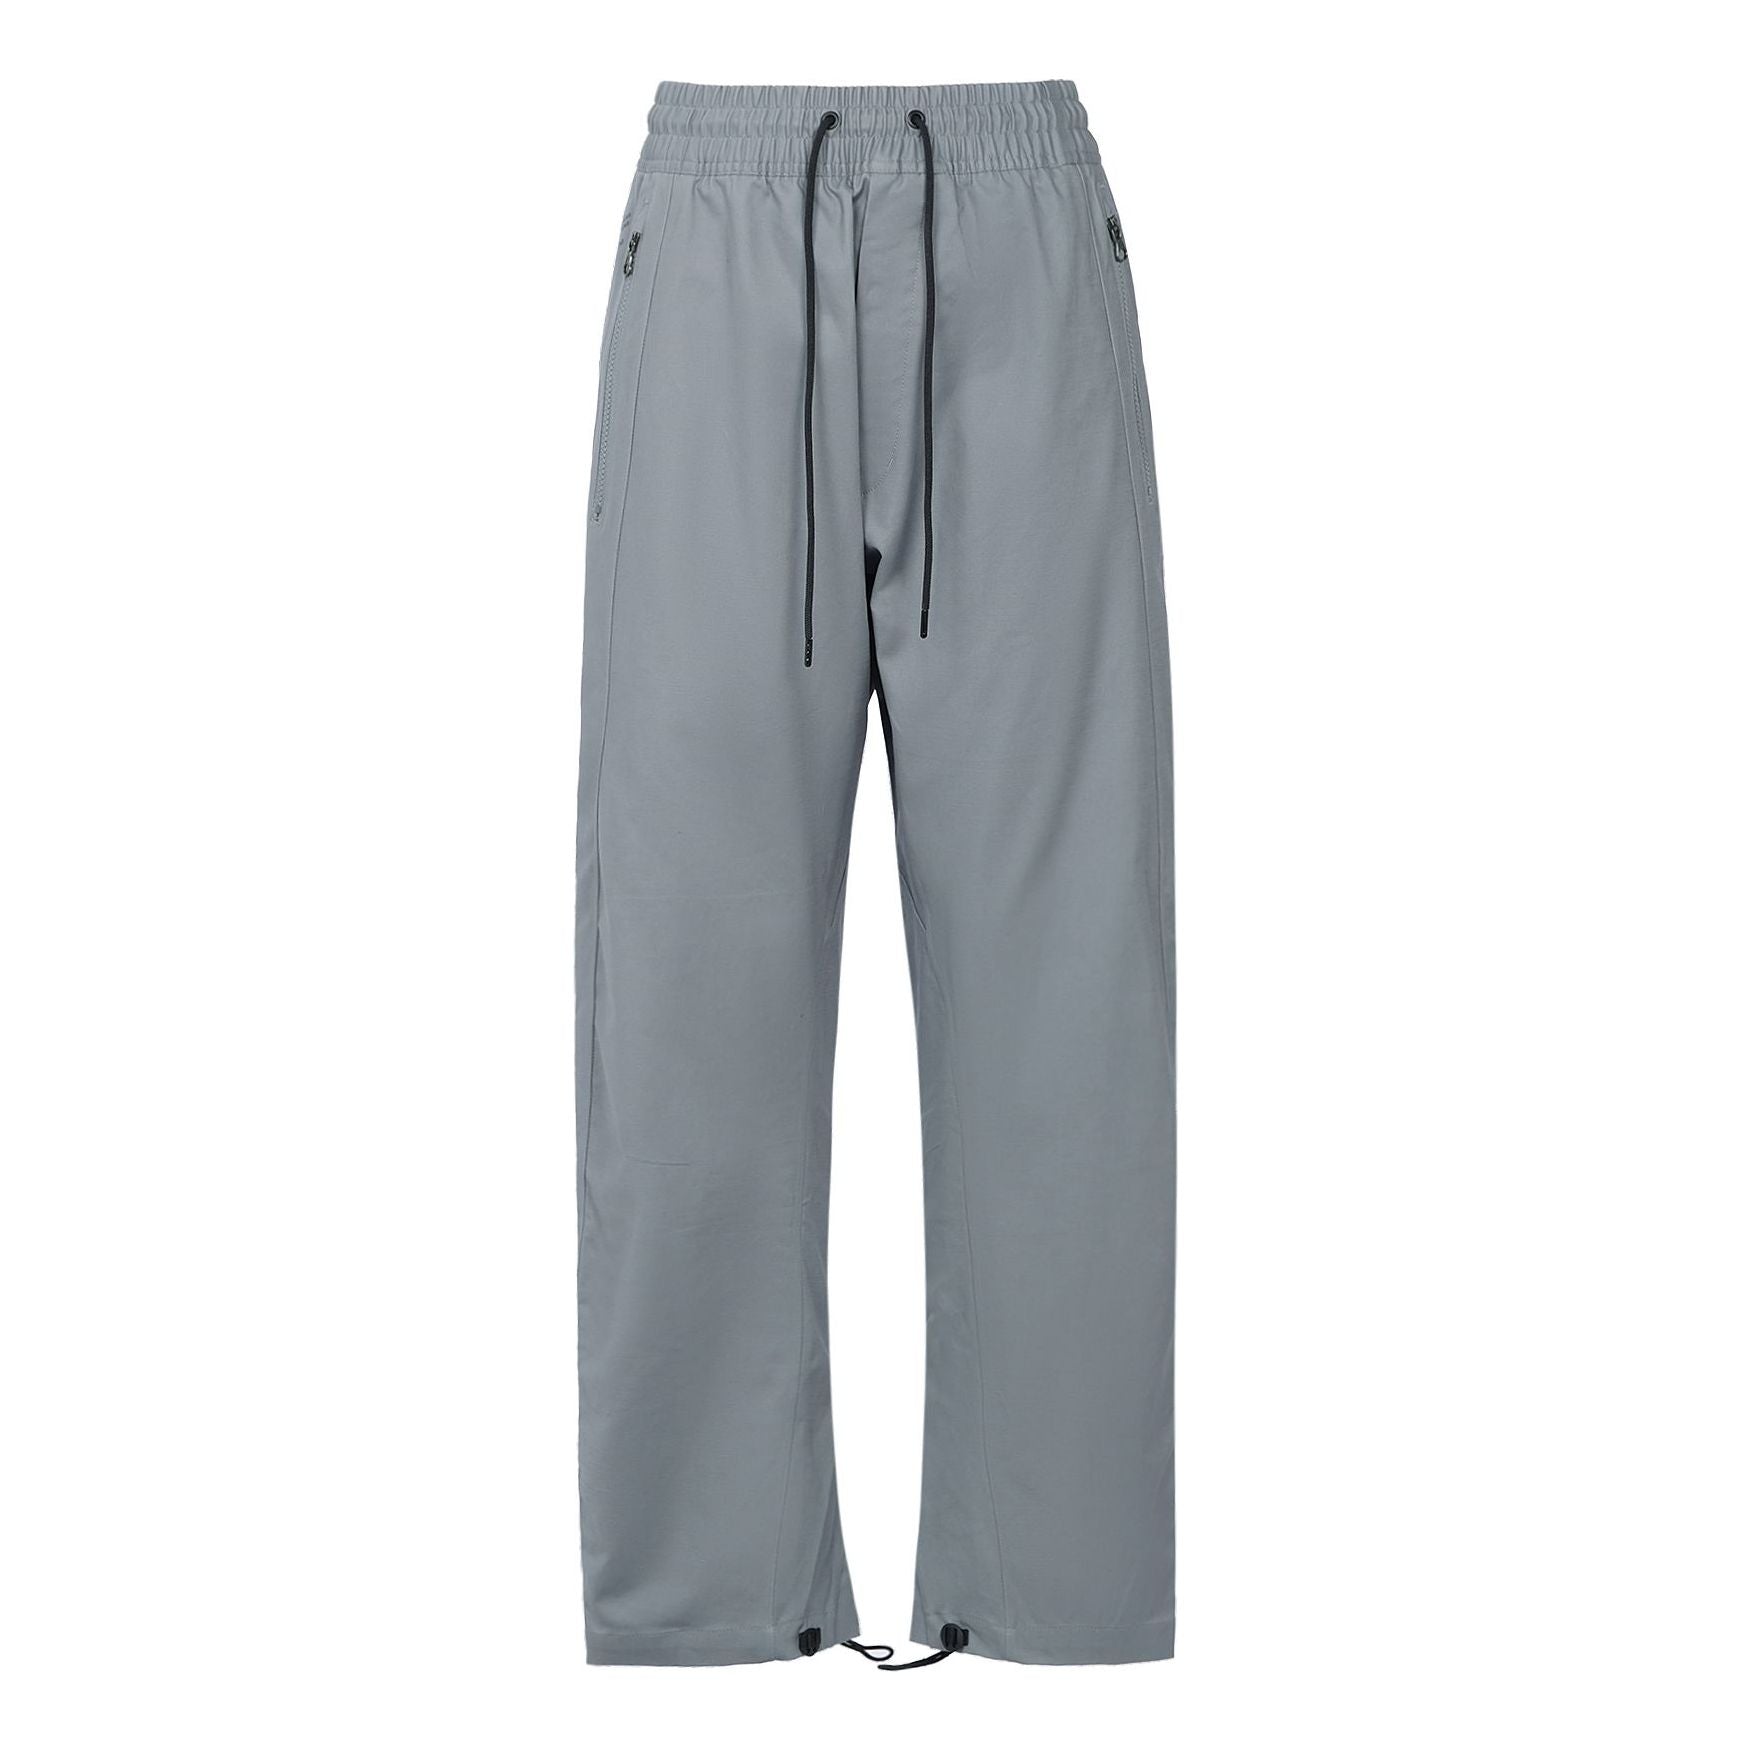 Men's NikeLab Gray ACG Variable Casual Pants/Trousers 923948-065